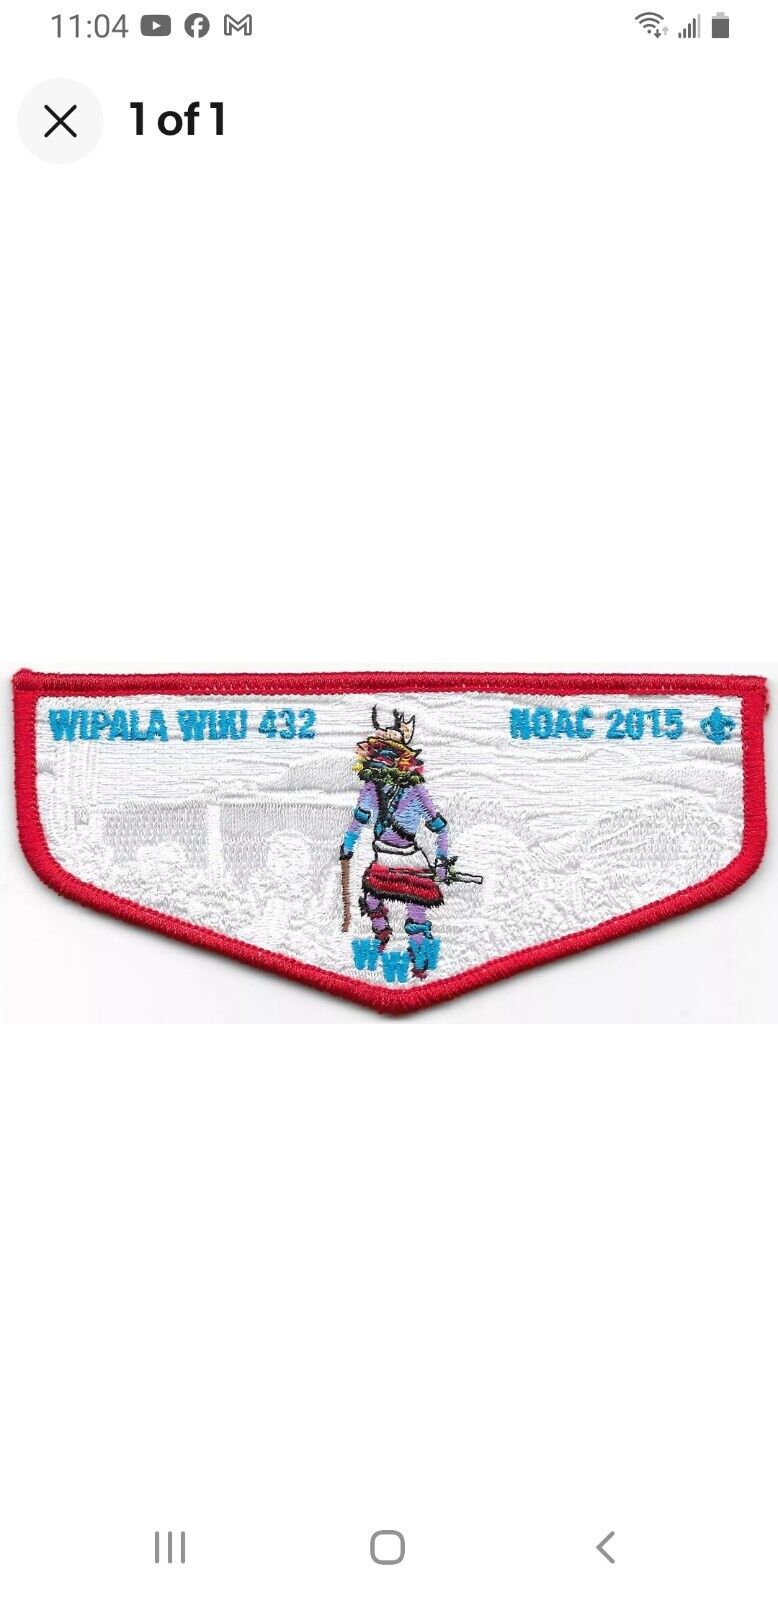 WIPALA WIKI 432  NOAC 2015  (S 218)